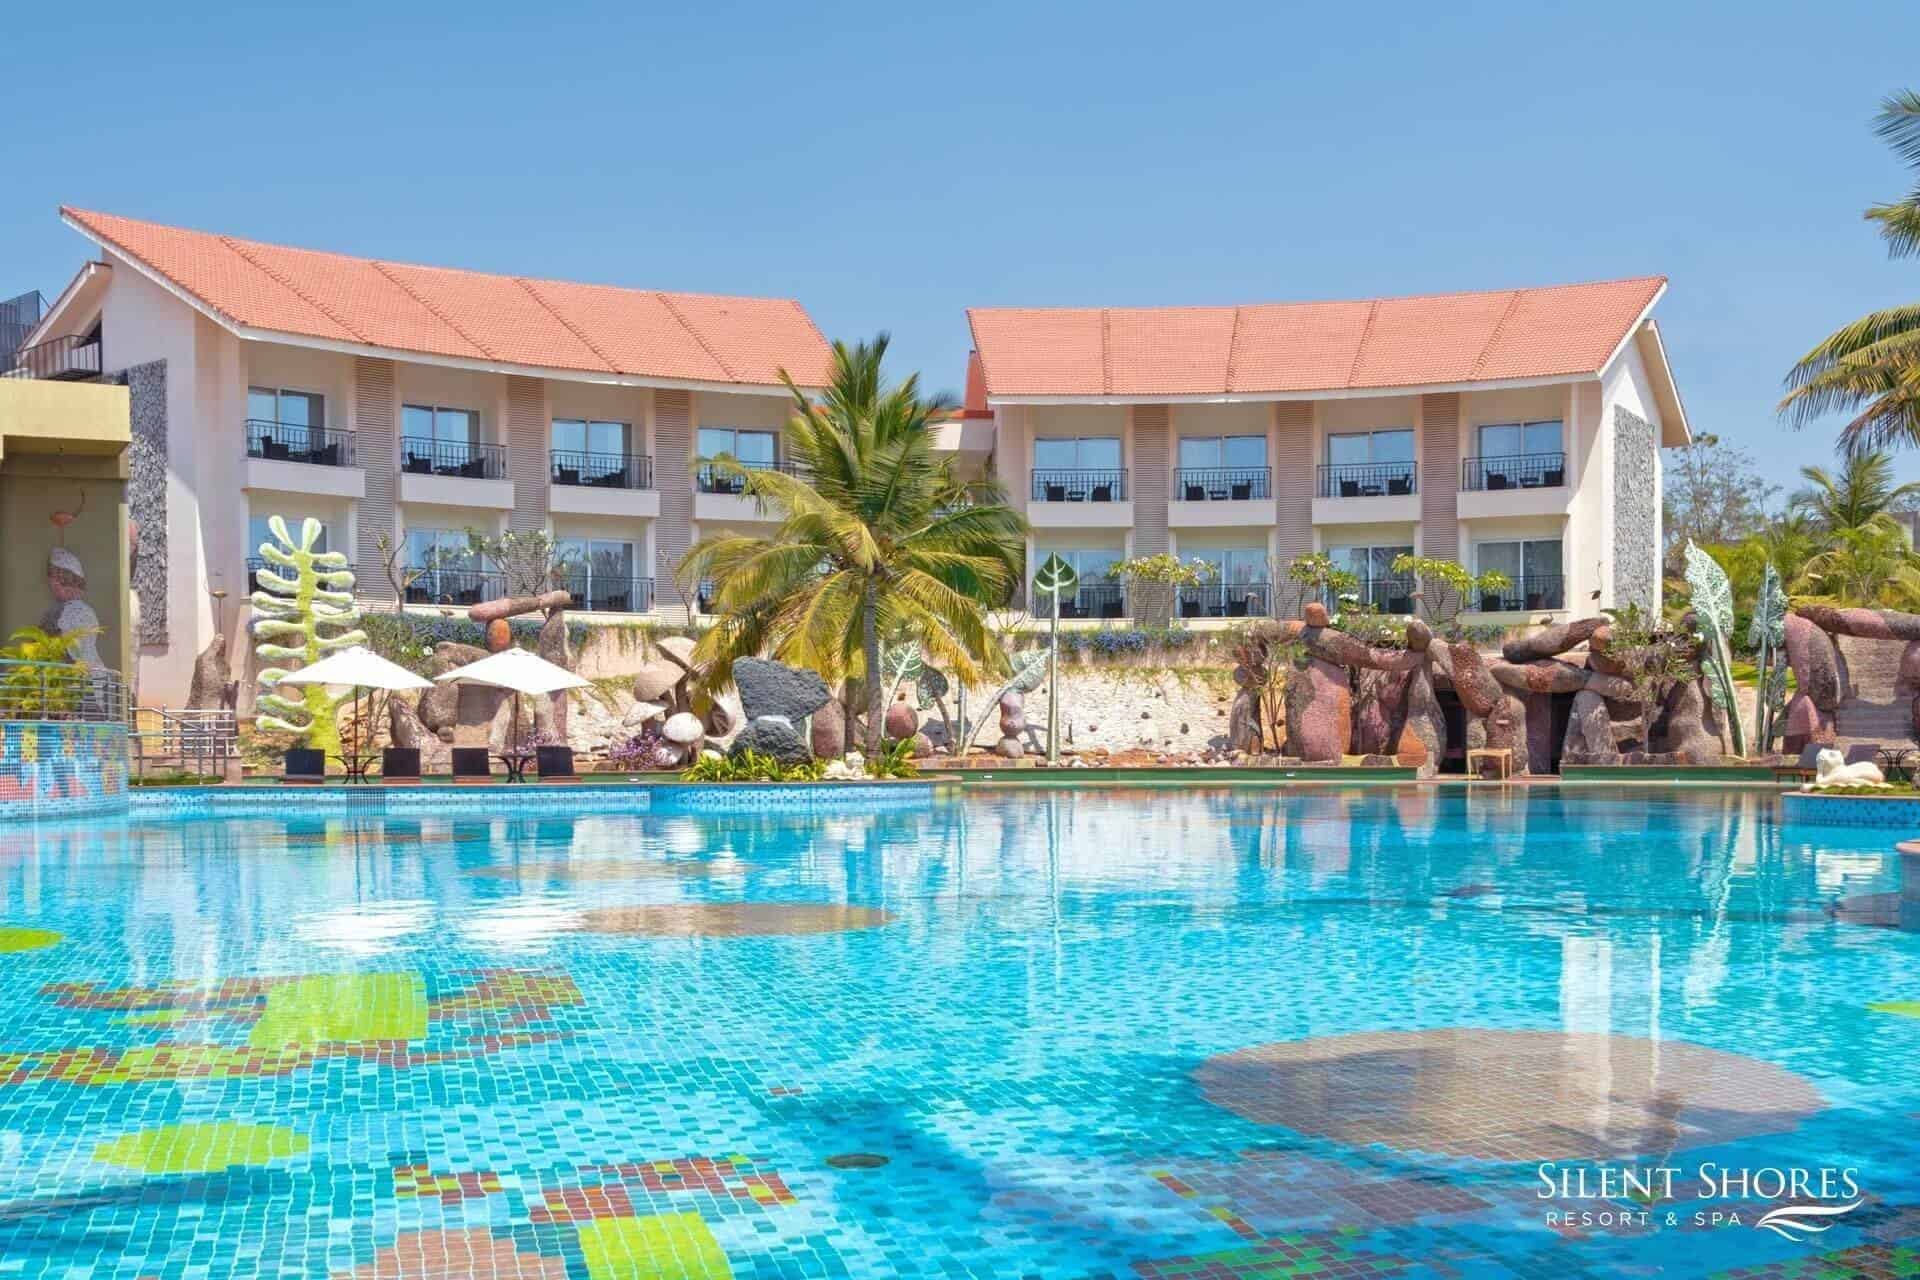 Swimming pool overlooking Superior rooms in Mysore, Silent Shores - The best spa resort in Mysore - resort in Mysore